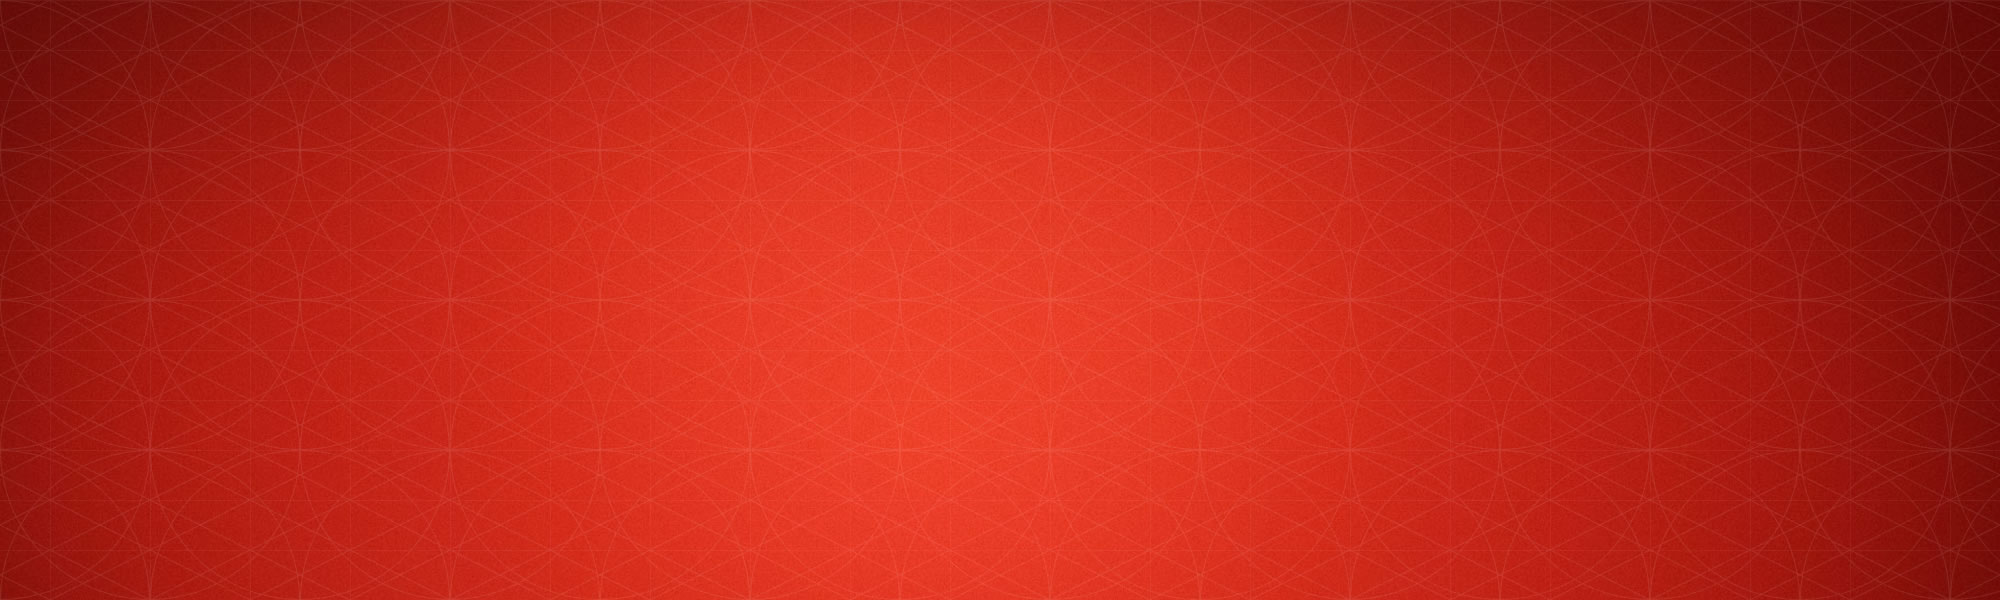 html5红色高端网络公司源码 设计建站类企业模版 - 仟亿科技模版网 - www.qianyikeji.com